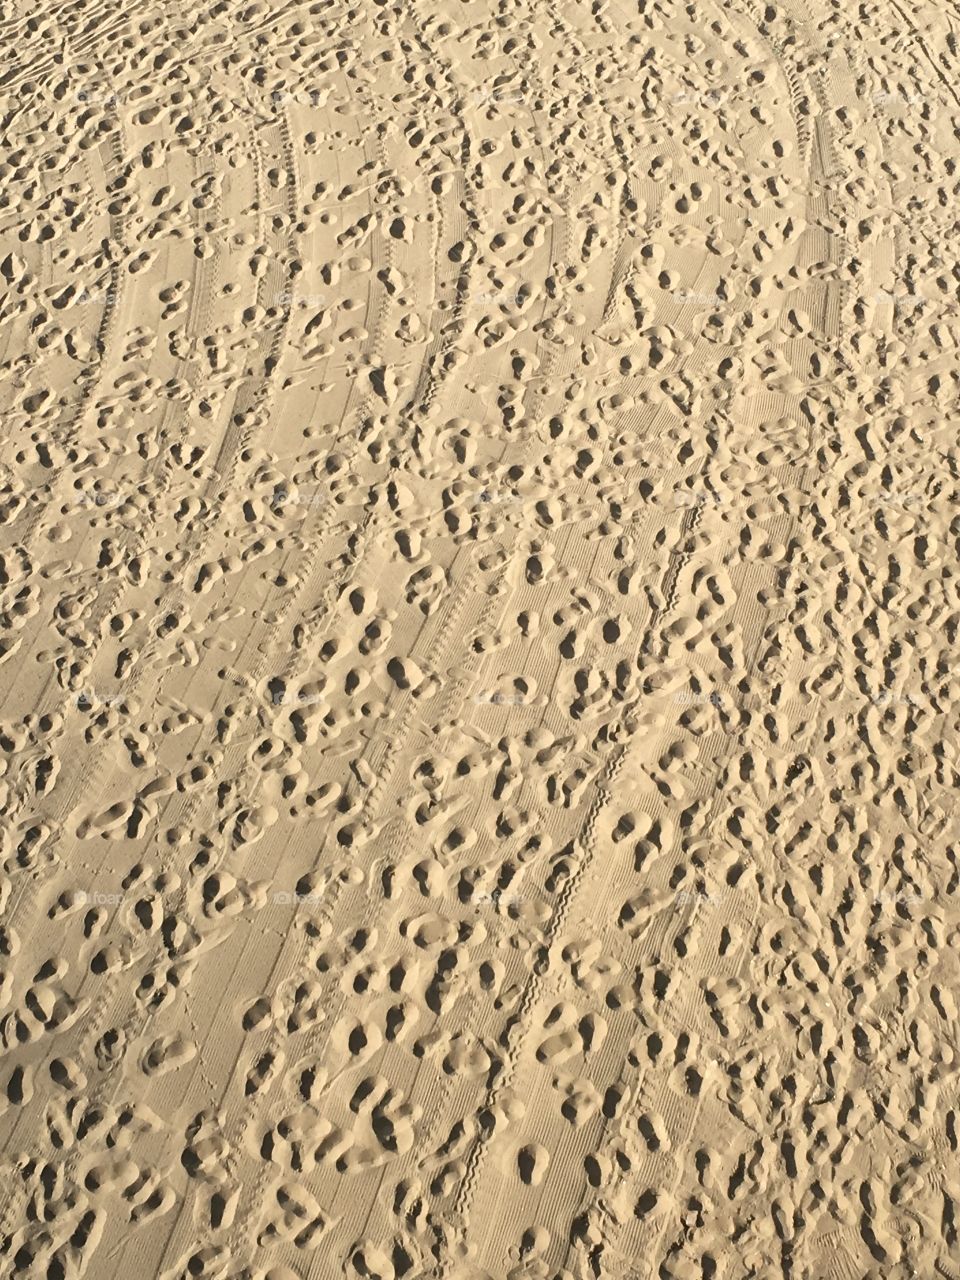 High angle view of footprint on beach